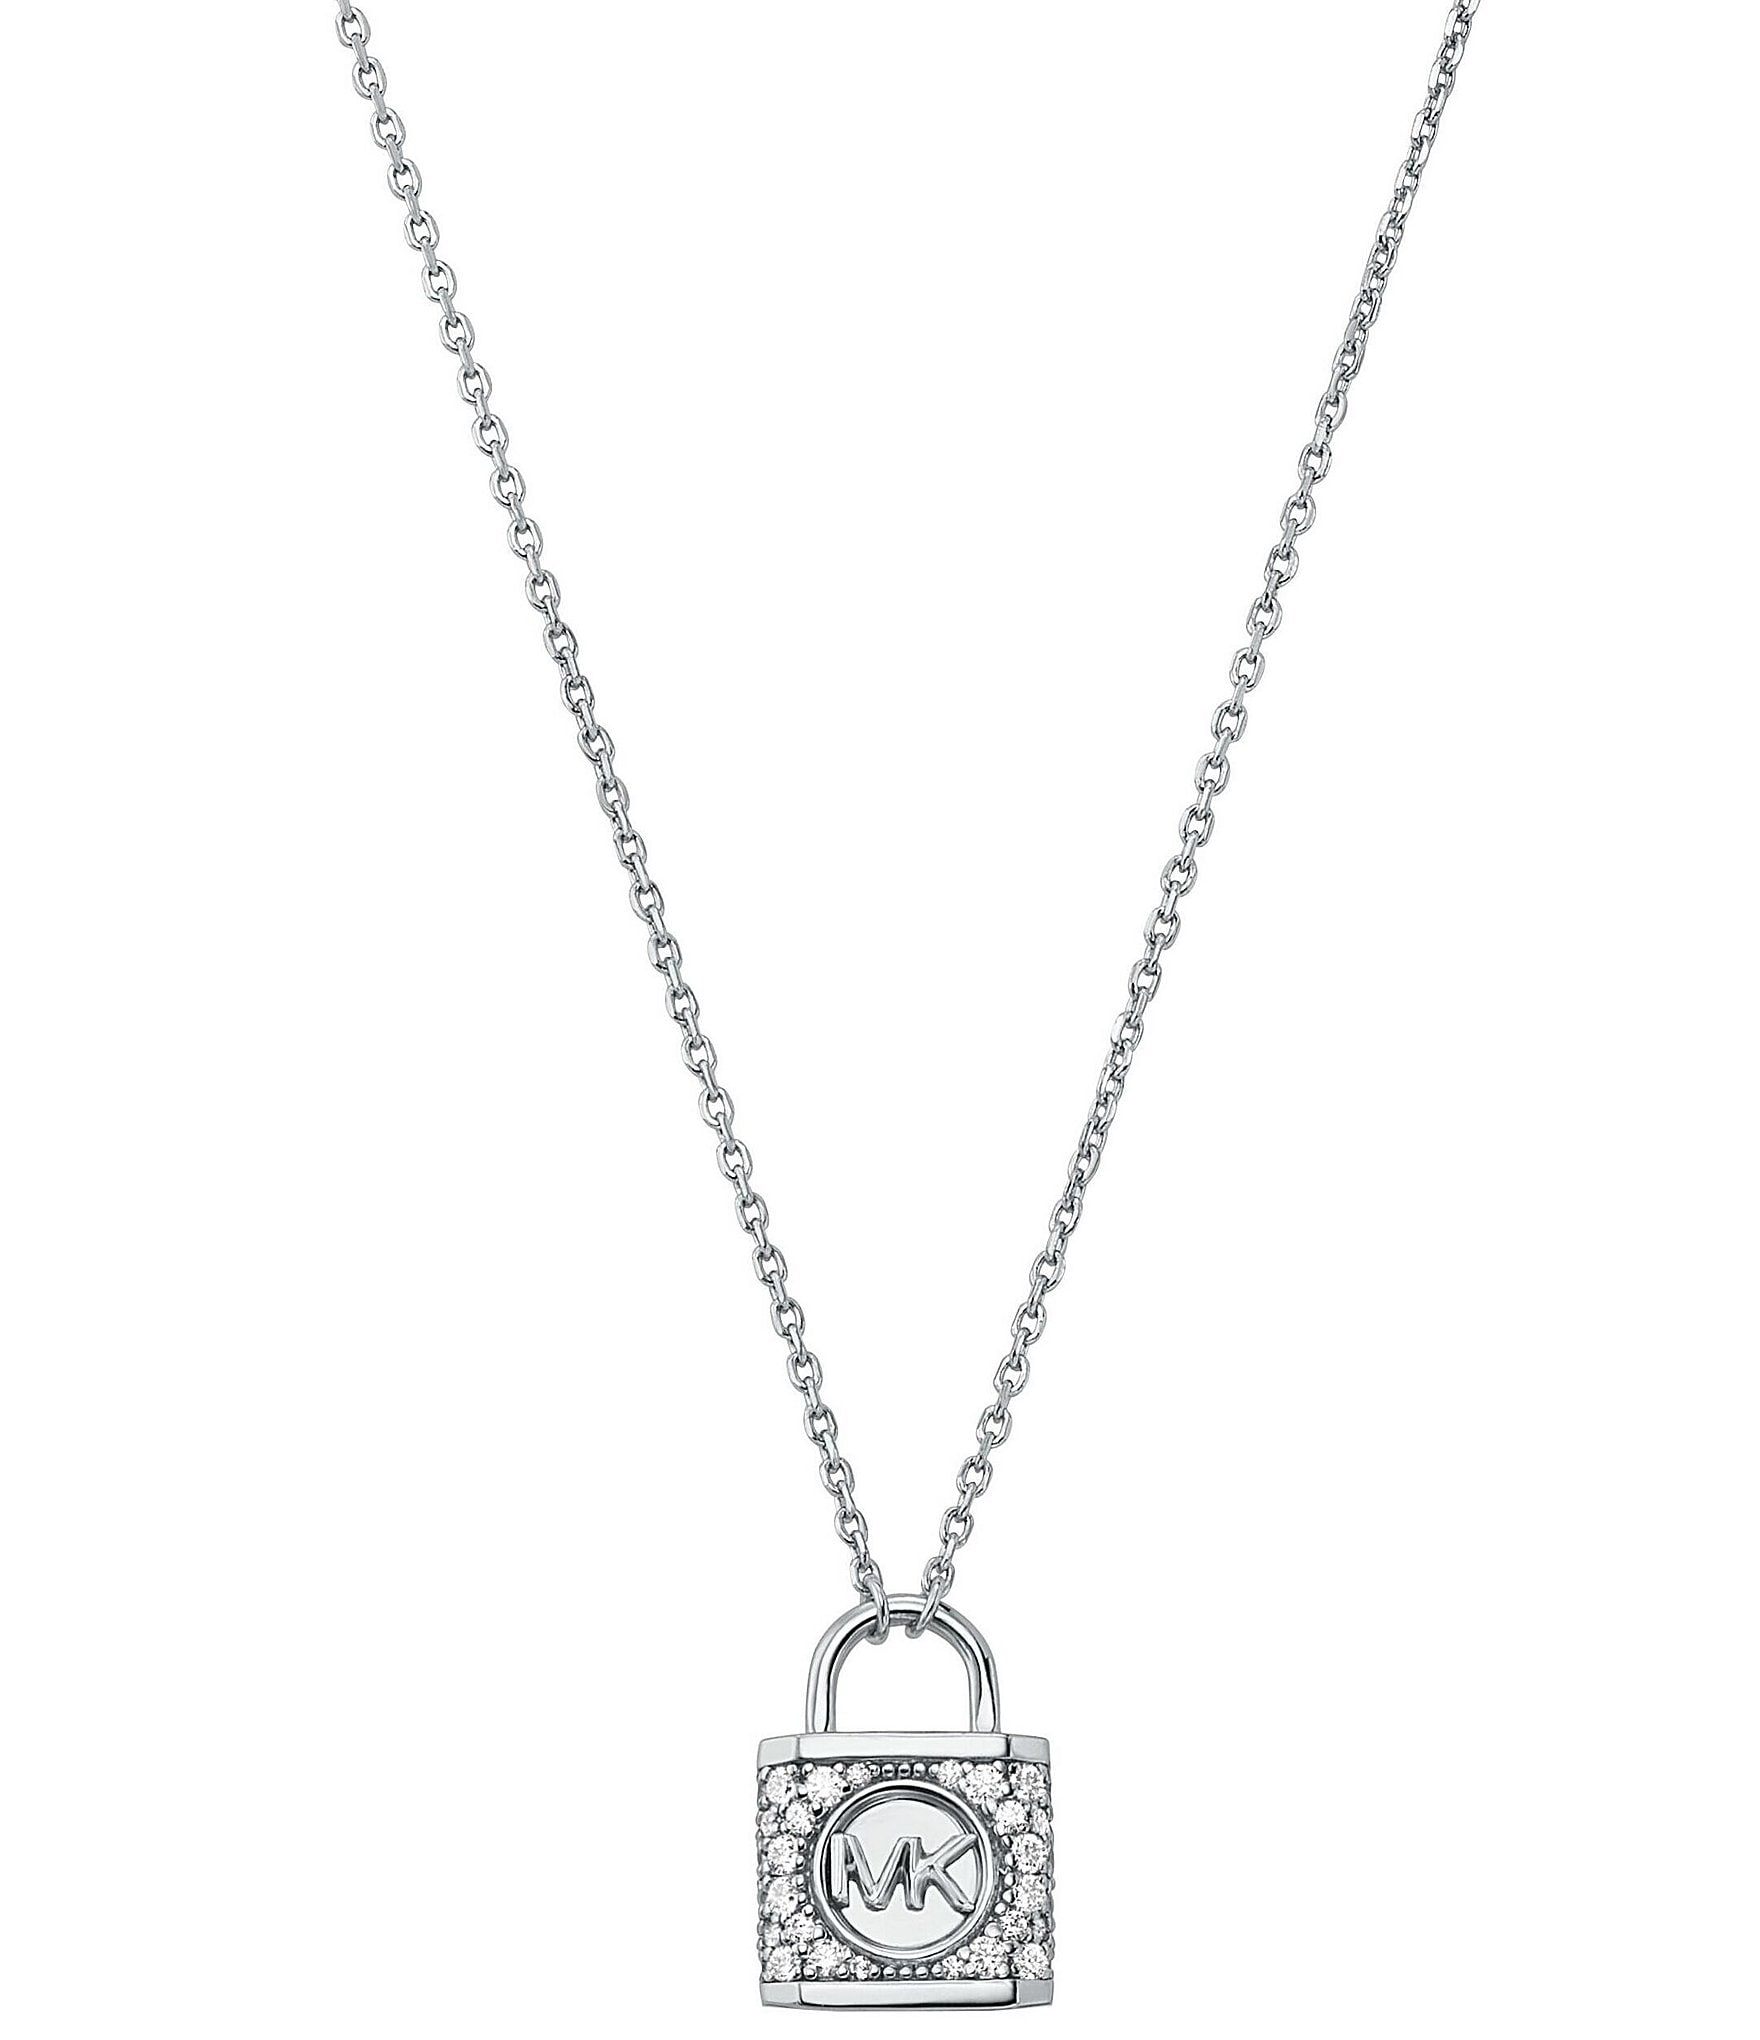 Michael Kors Pav Lock Short Pendant Necklace - Silver